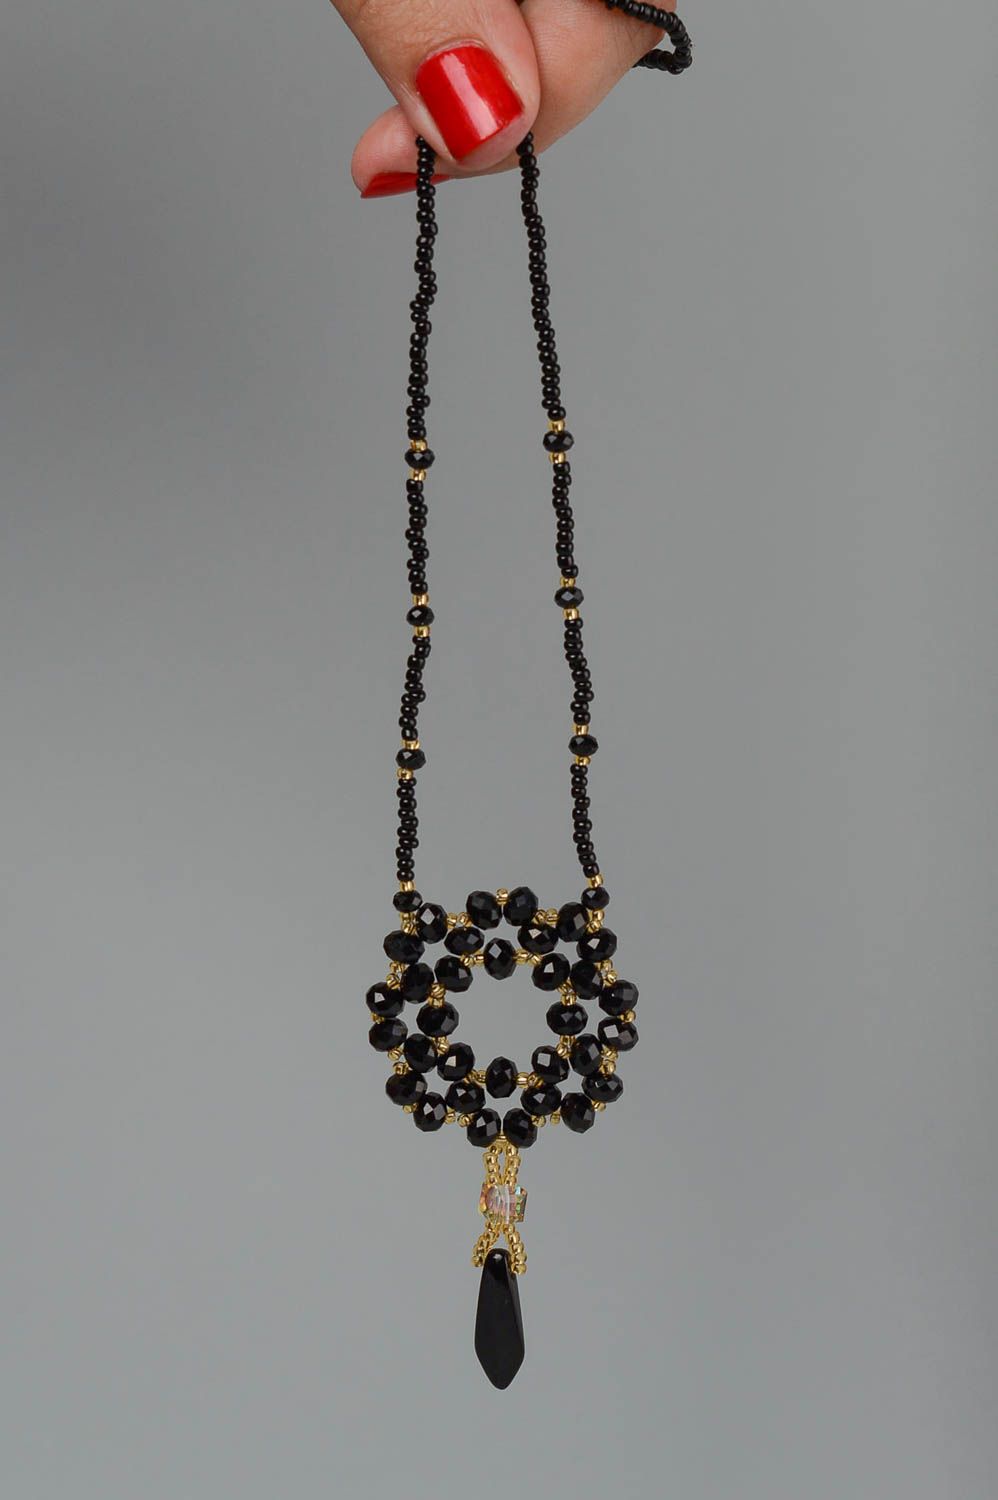 Handcraft necklace seed beads necklace designer accessories vintage bijouterie photo 5